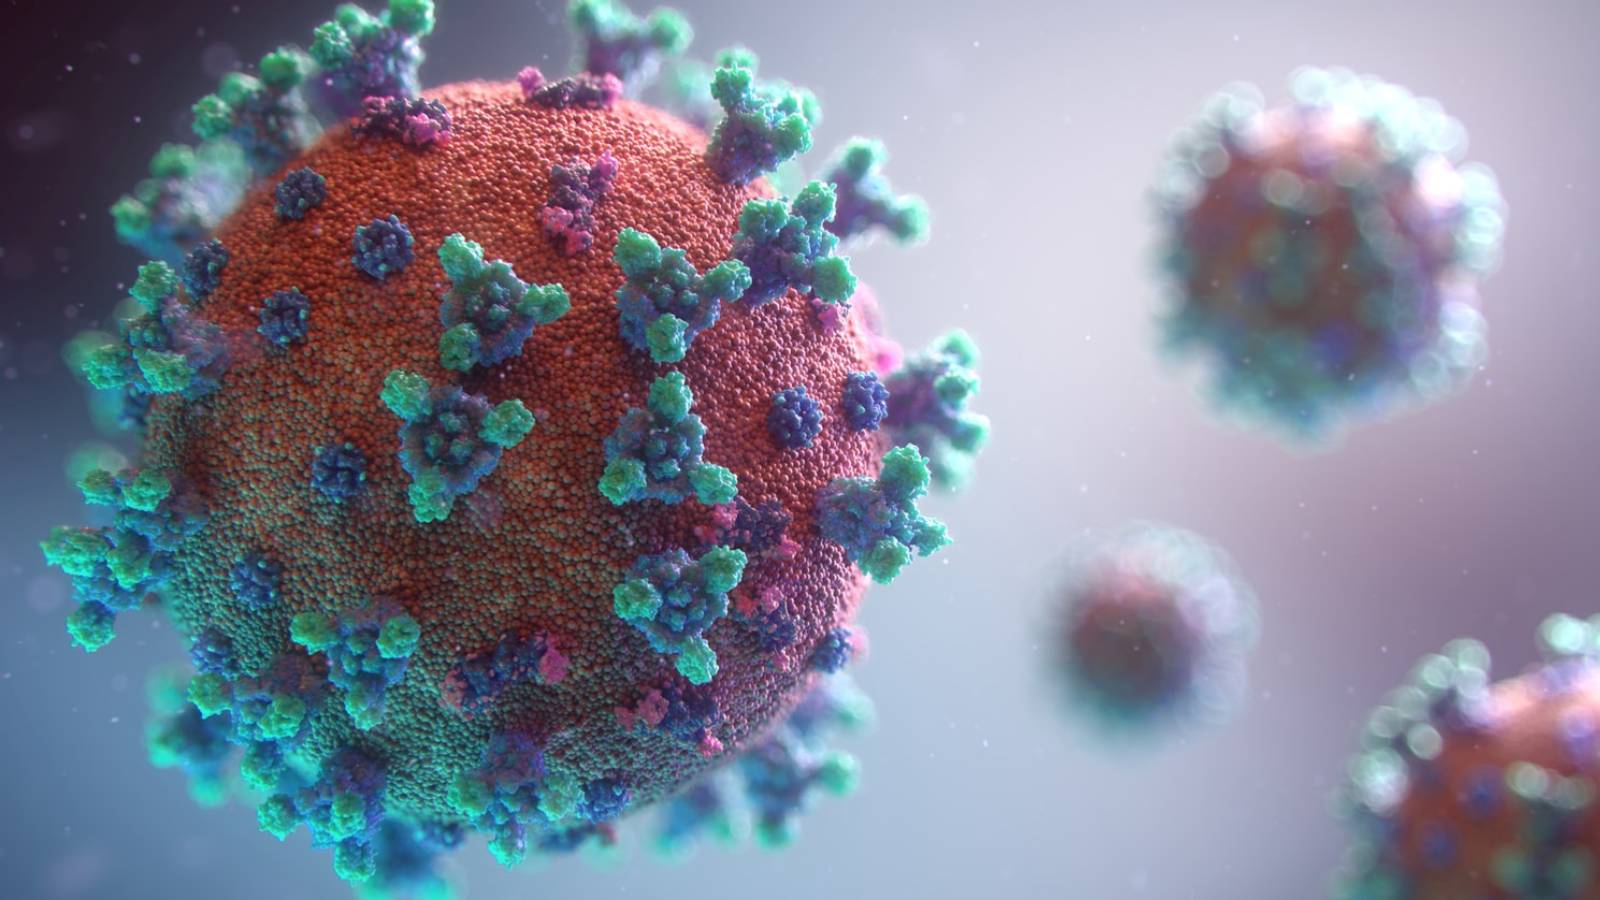 La Roumanie vaccine quotidiennement 20.000 XNUMX personnes contre le coronavirus demain